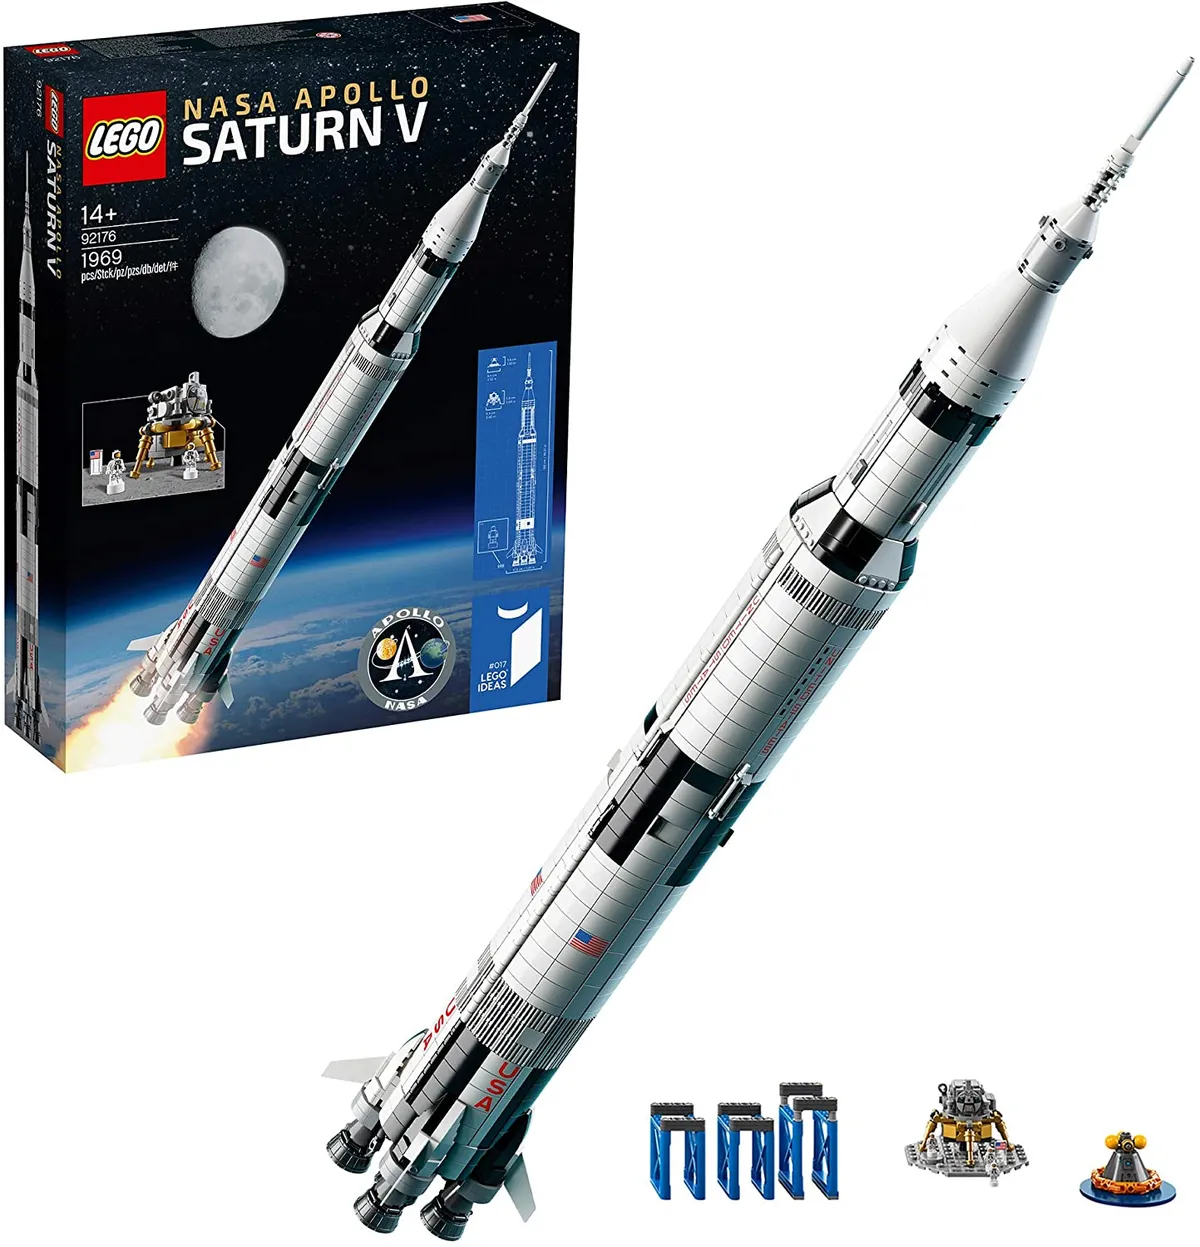 Lego Rocket kits